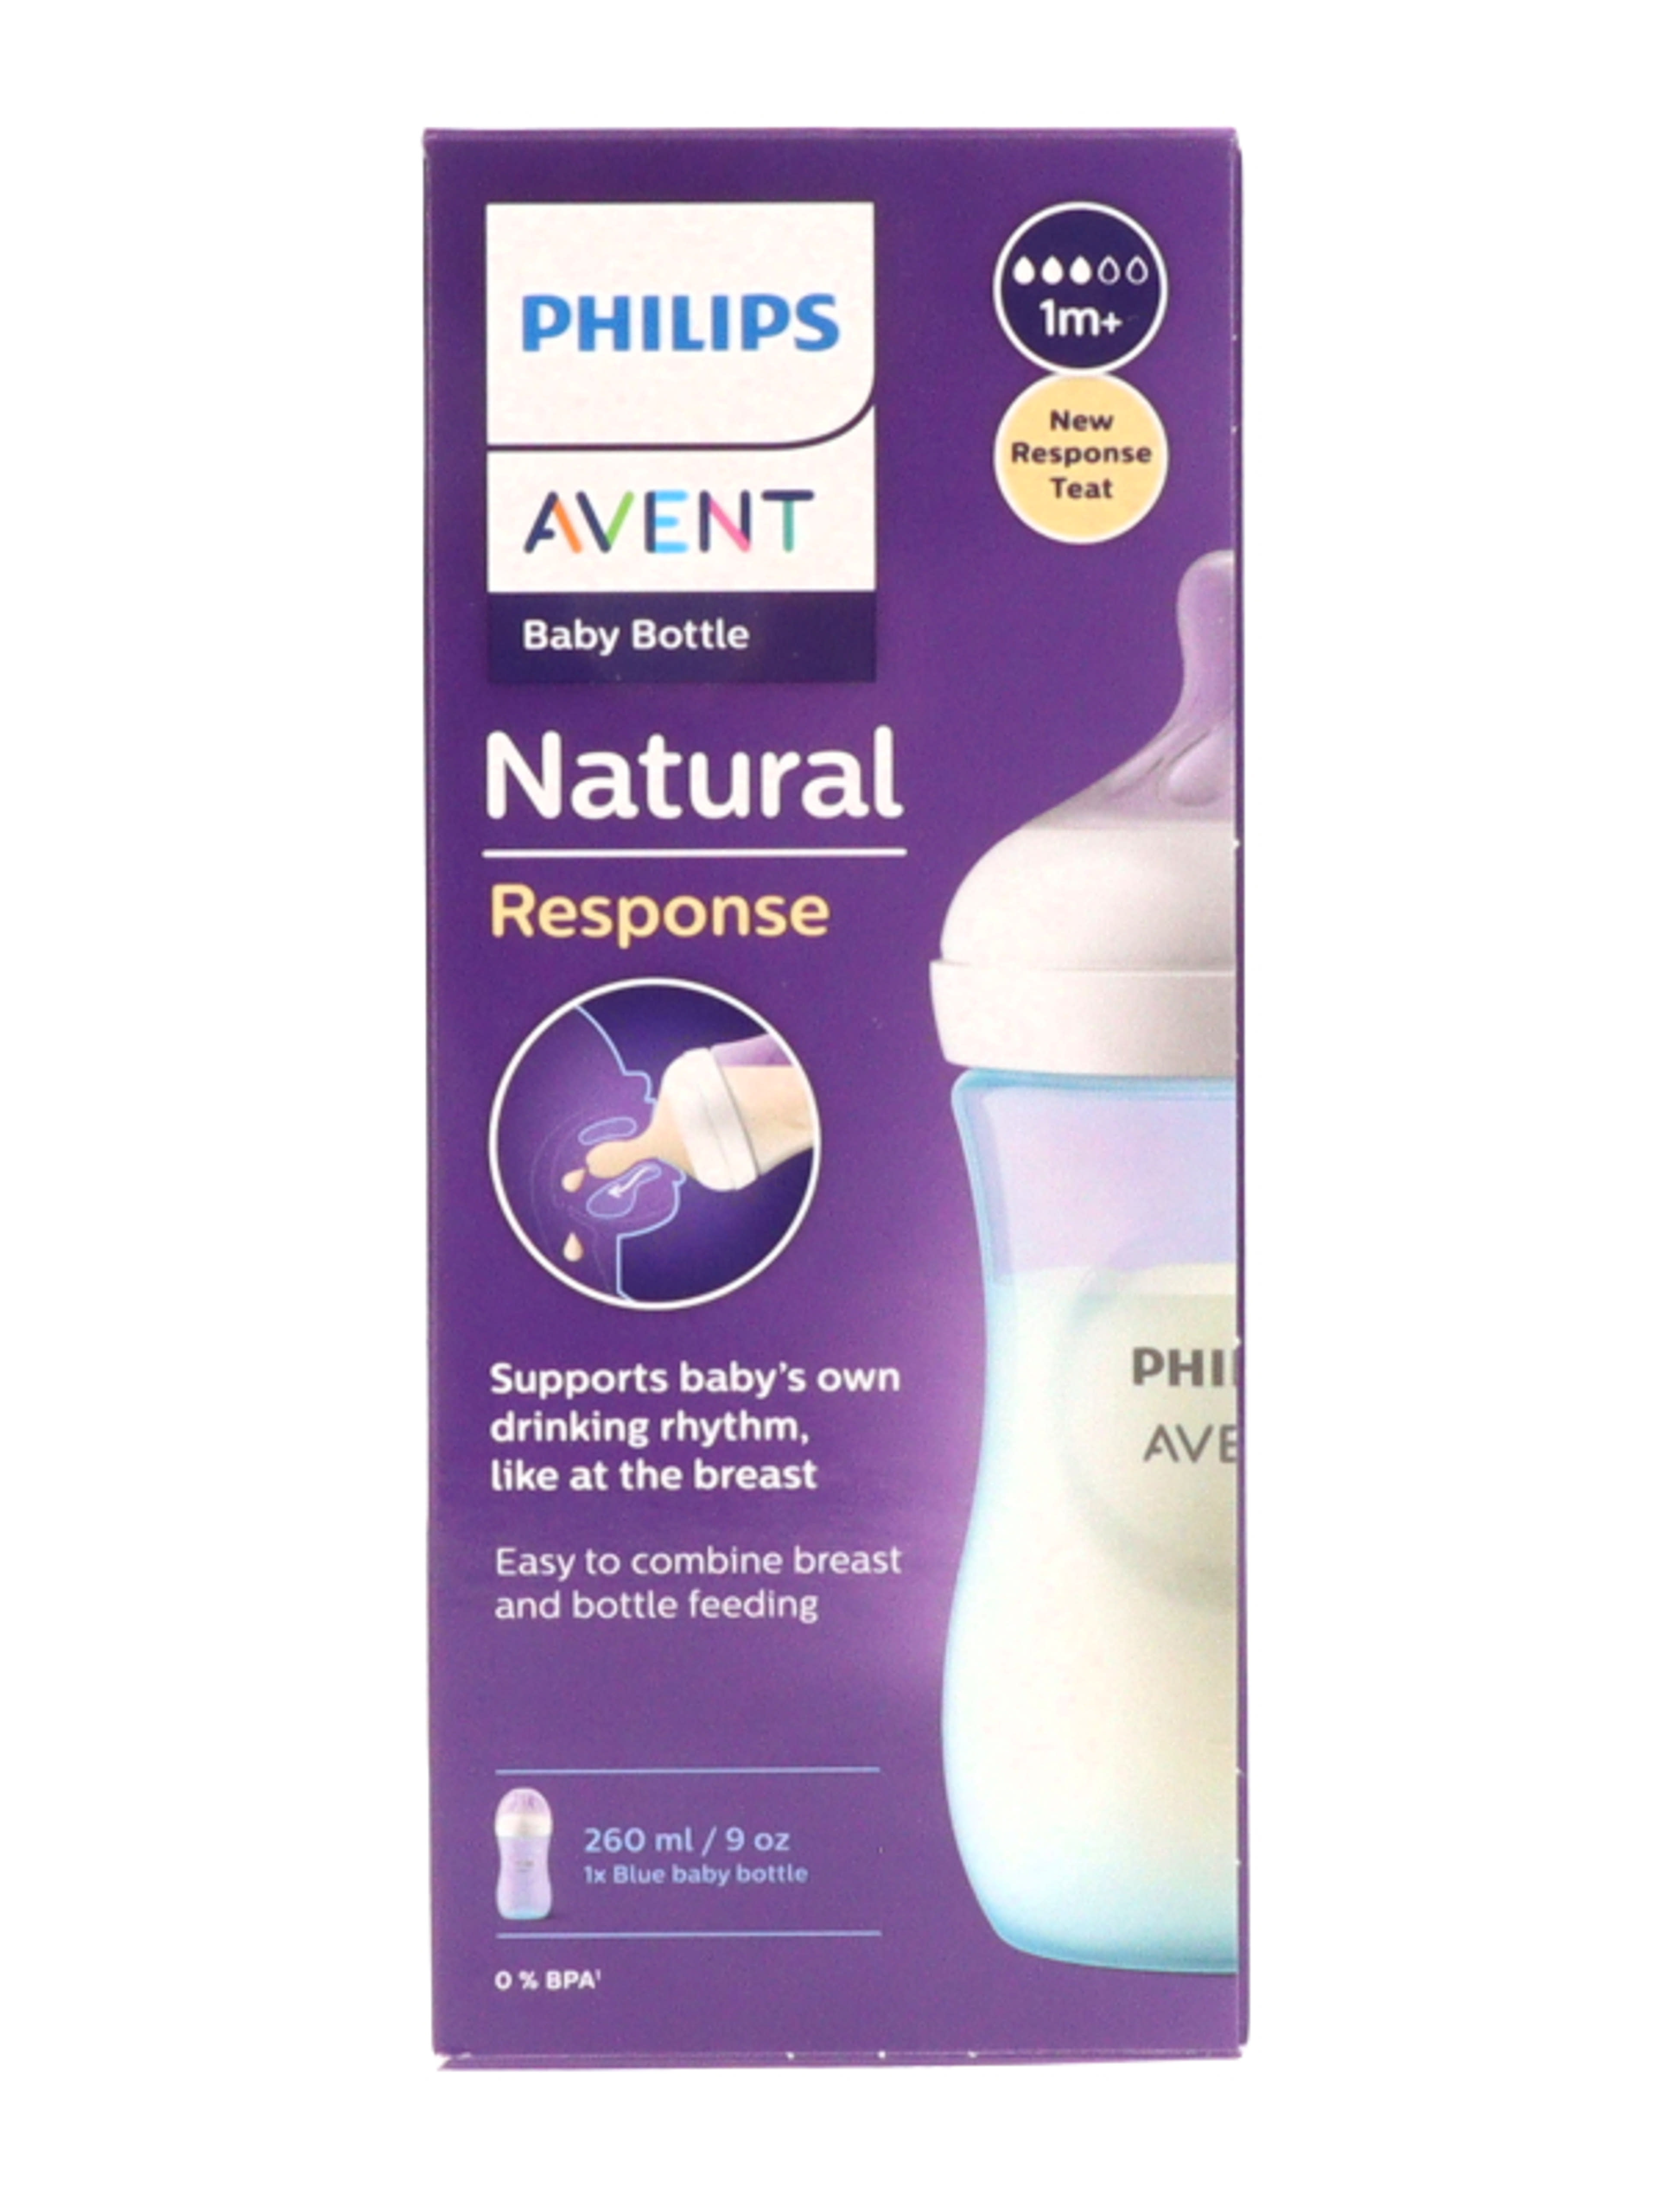 Philips Avent Natural Response cumisüveg 1 hónapos kortól 260 ml kék - 1 db